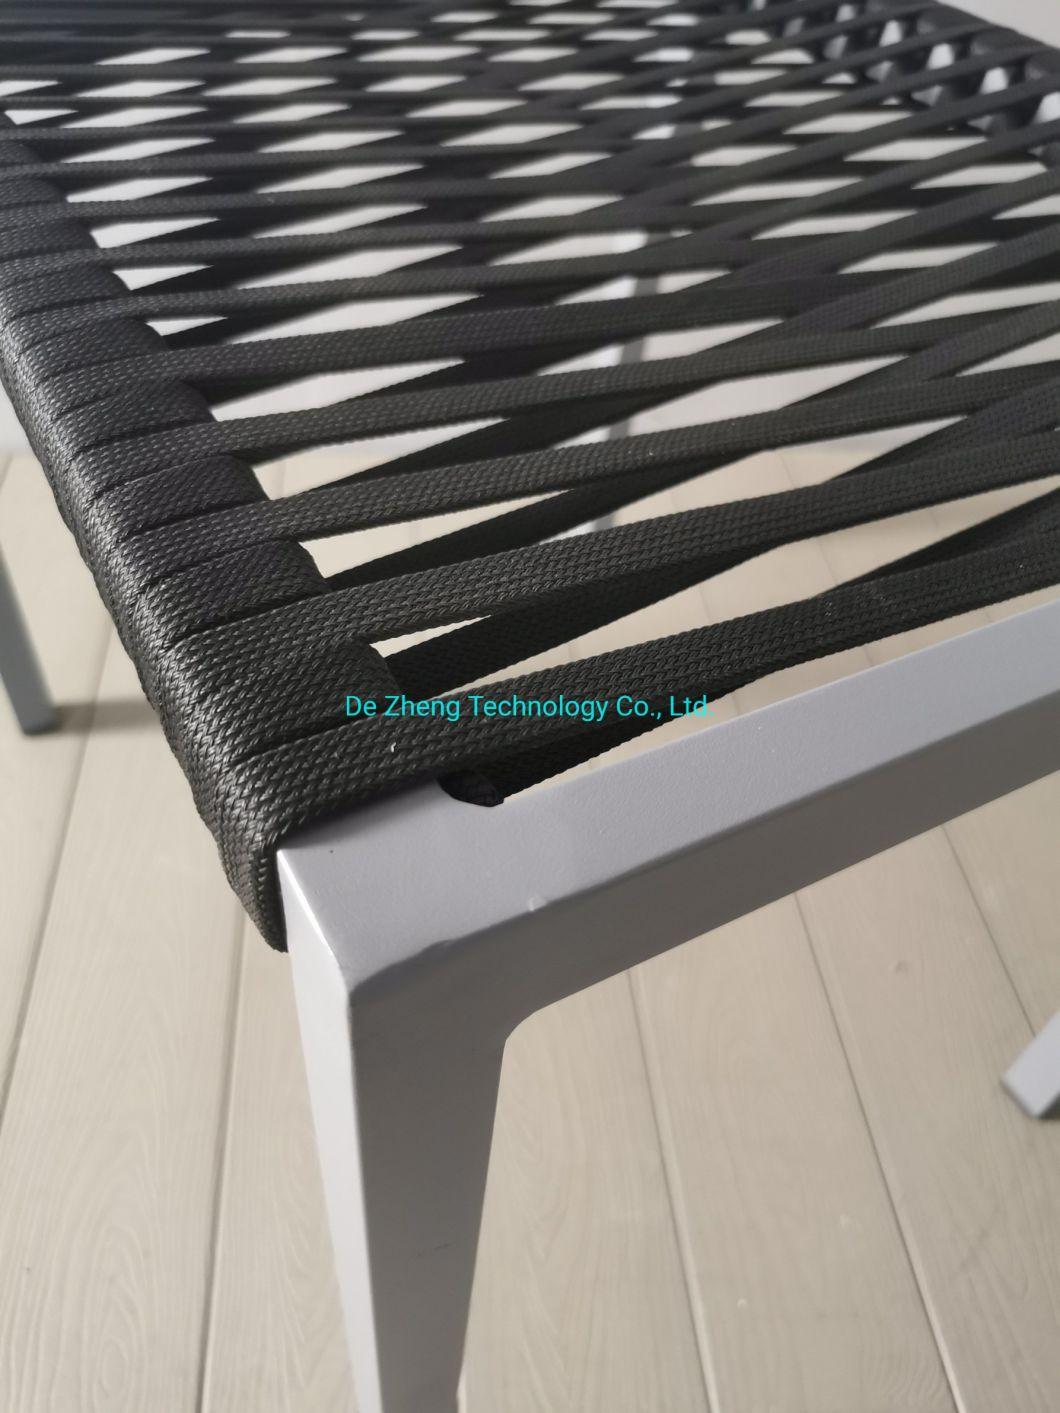 Commerical Outdoor Pool Side Garden Leisure Aluminium Restaurtant Mesh Seat Dining Chair